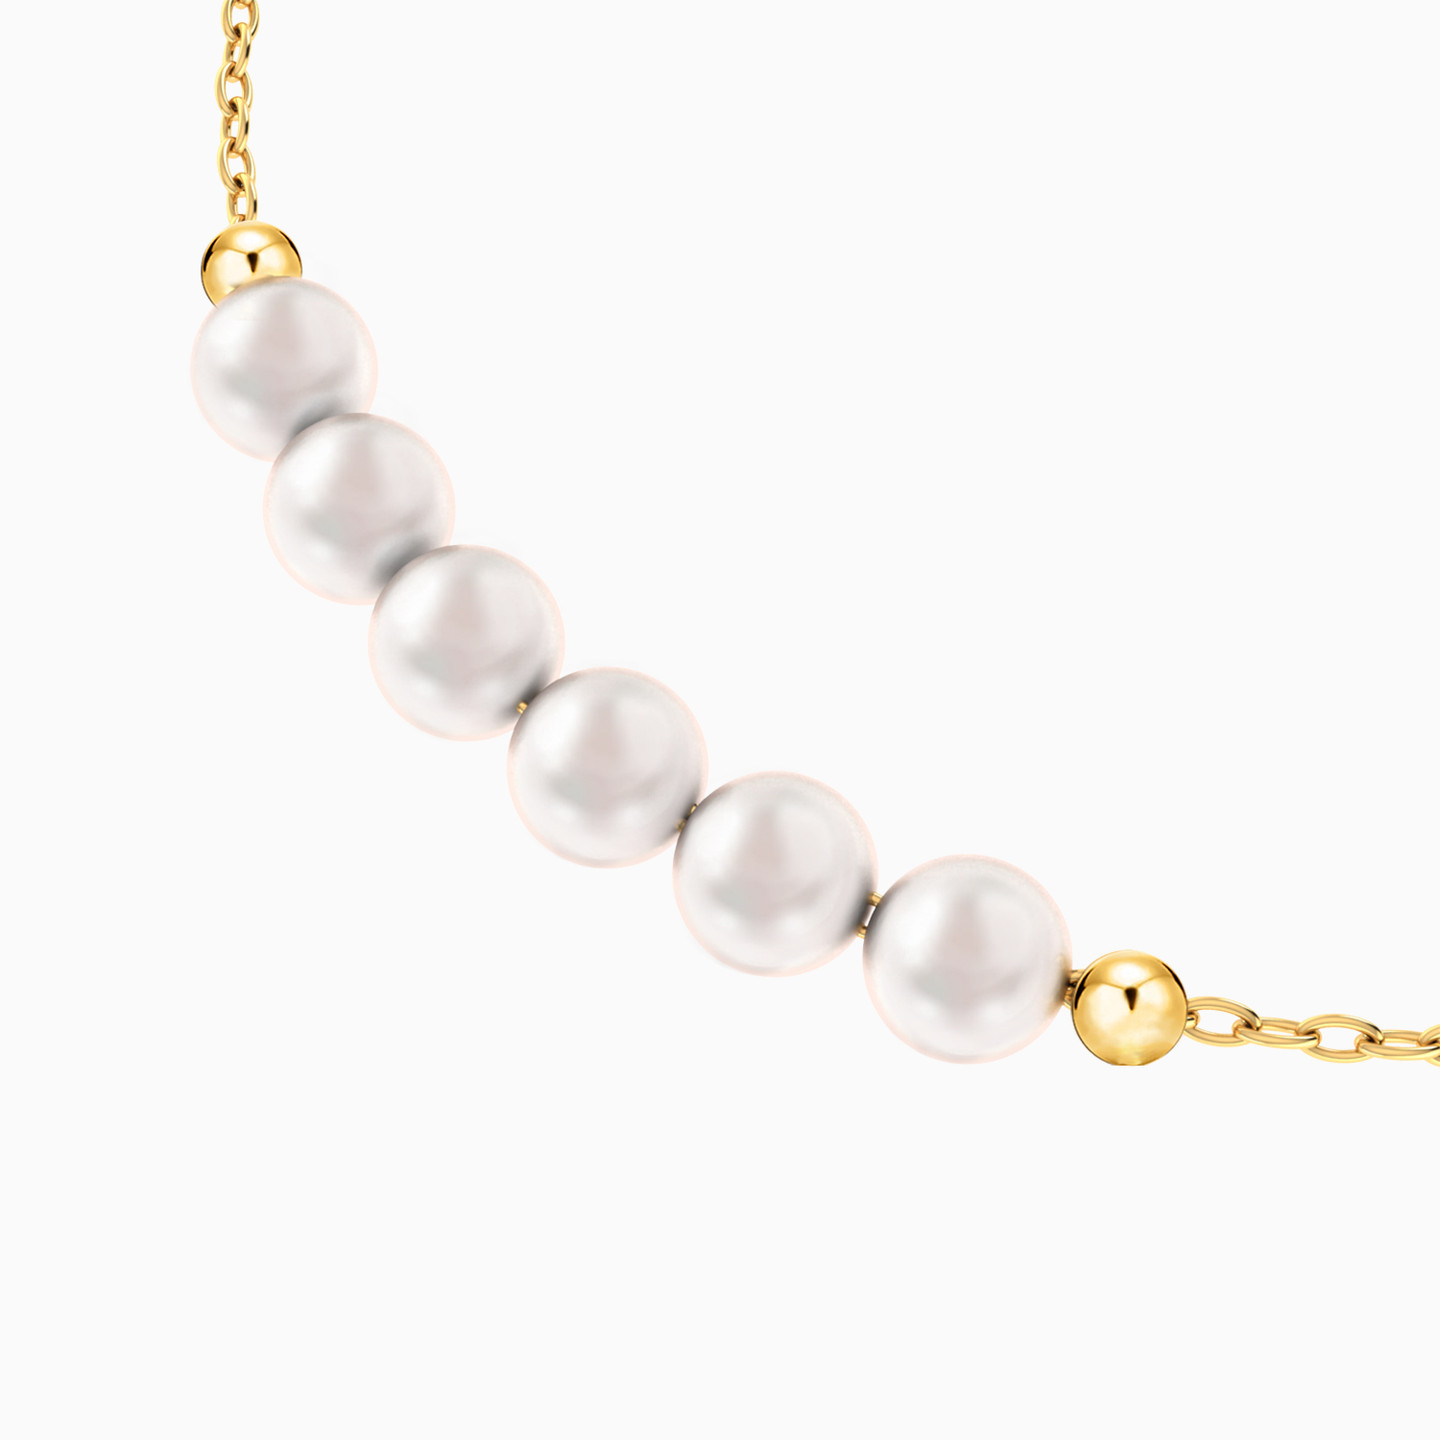 18K Gold Pearls Chain Bracelet - 3